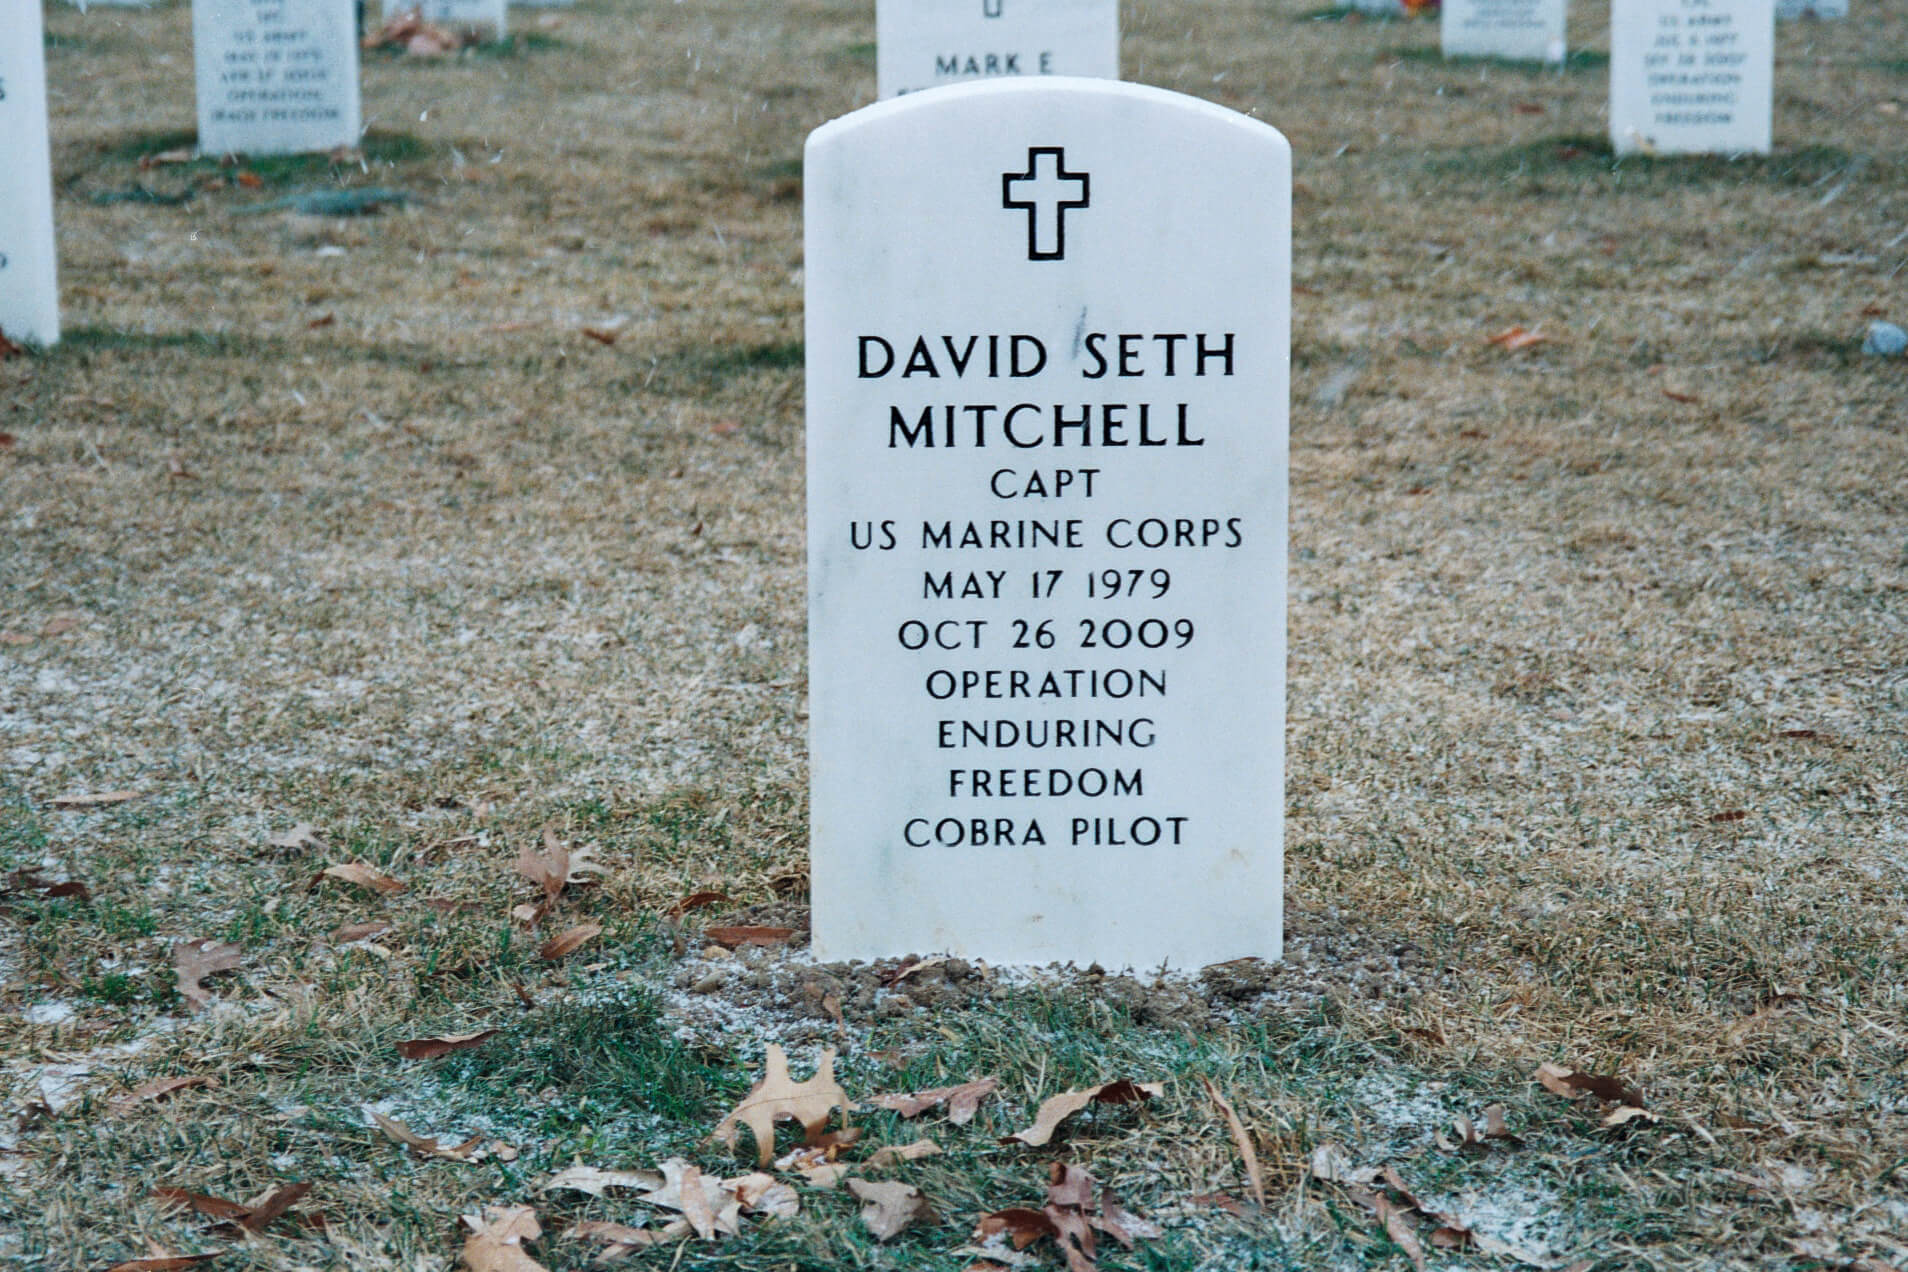 dsmitchell-gravesite-photo-february-2010-002